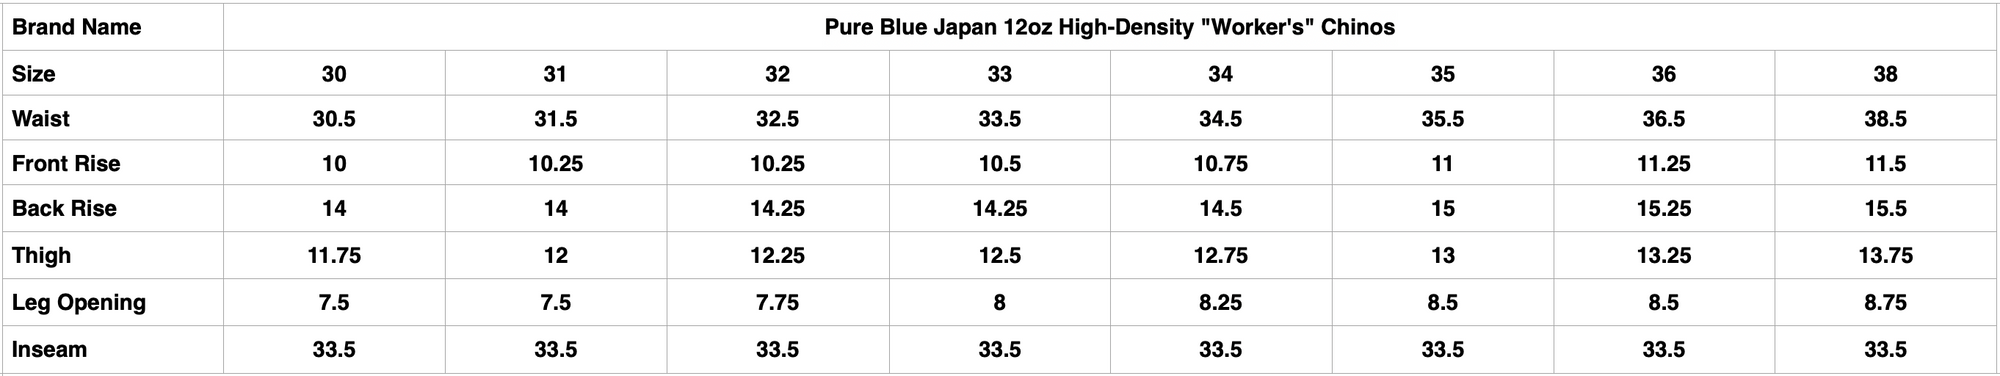 Pure Blue Japan 12oz High-Density "Worker's" Chinos (Black)